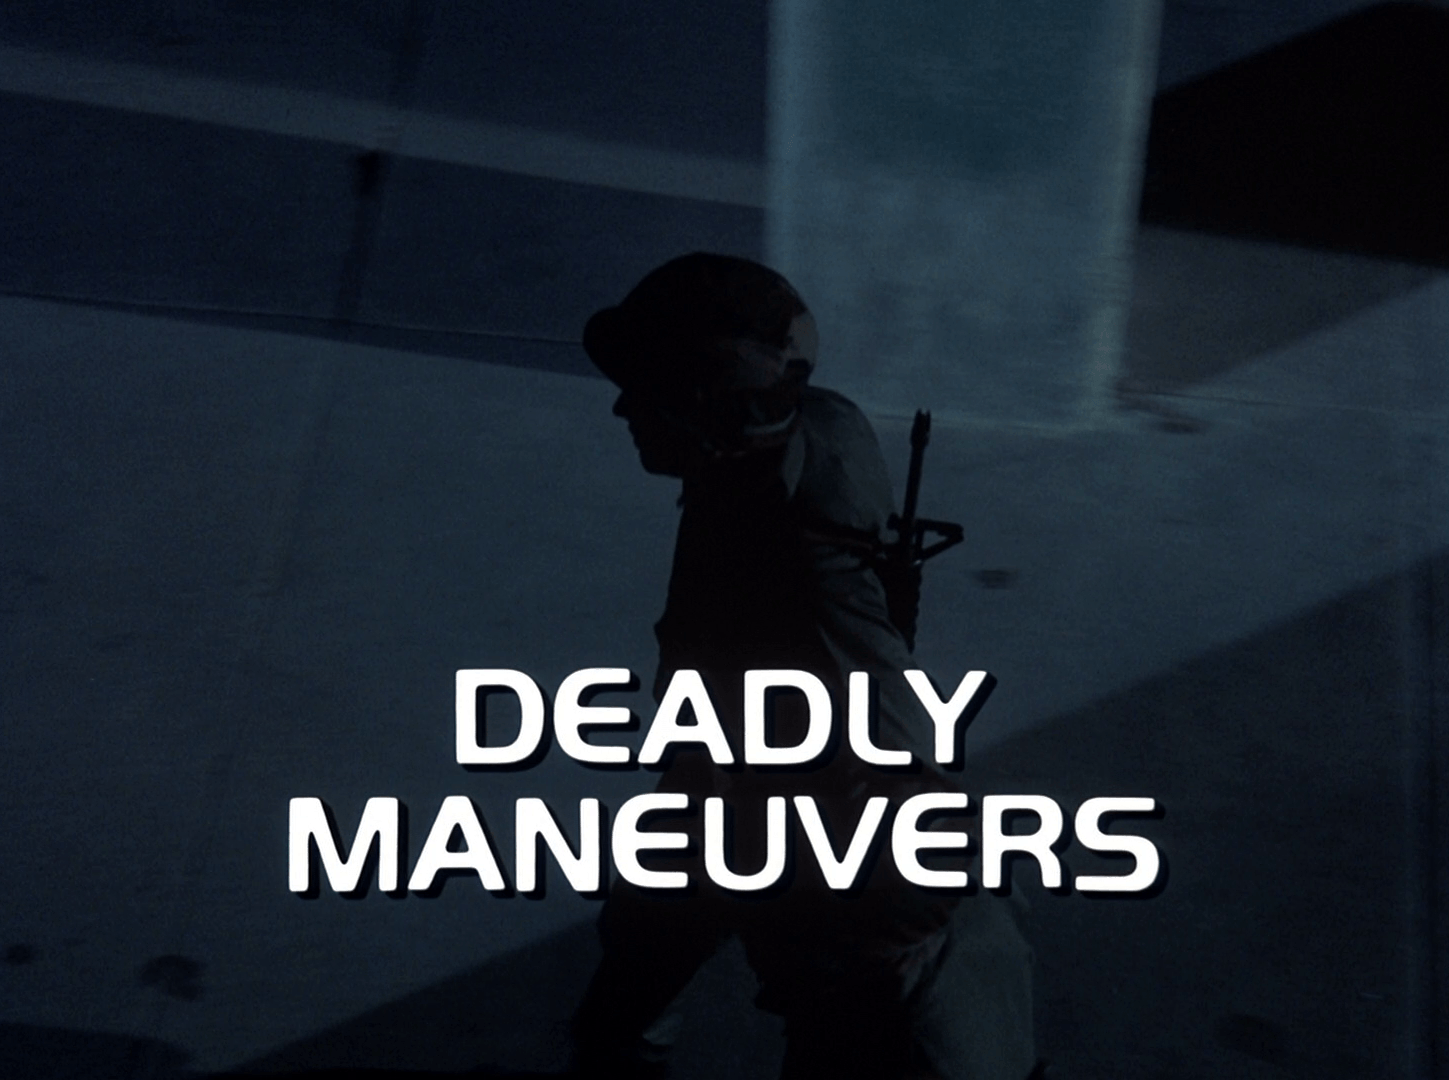 Knight Rider Season 1 - Episode 2 - Deadly Maneuvers - Photo 7